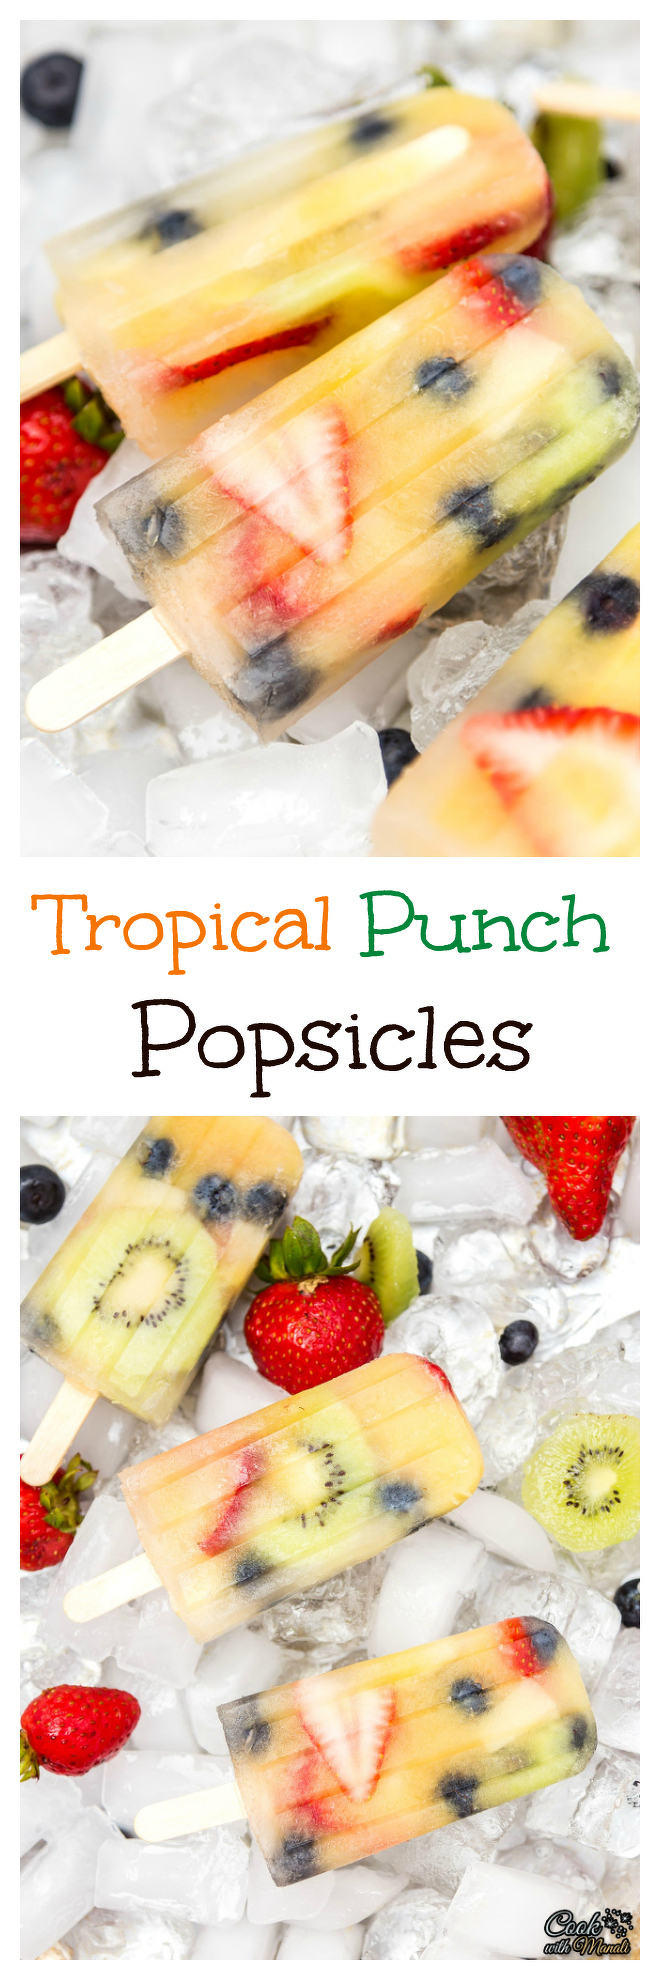 Tropical Punch Popsicles Collage-nocwm